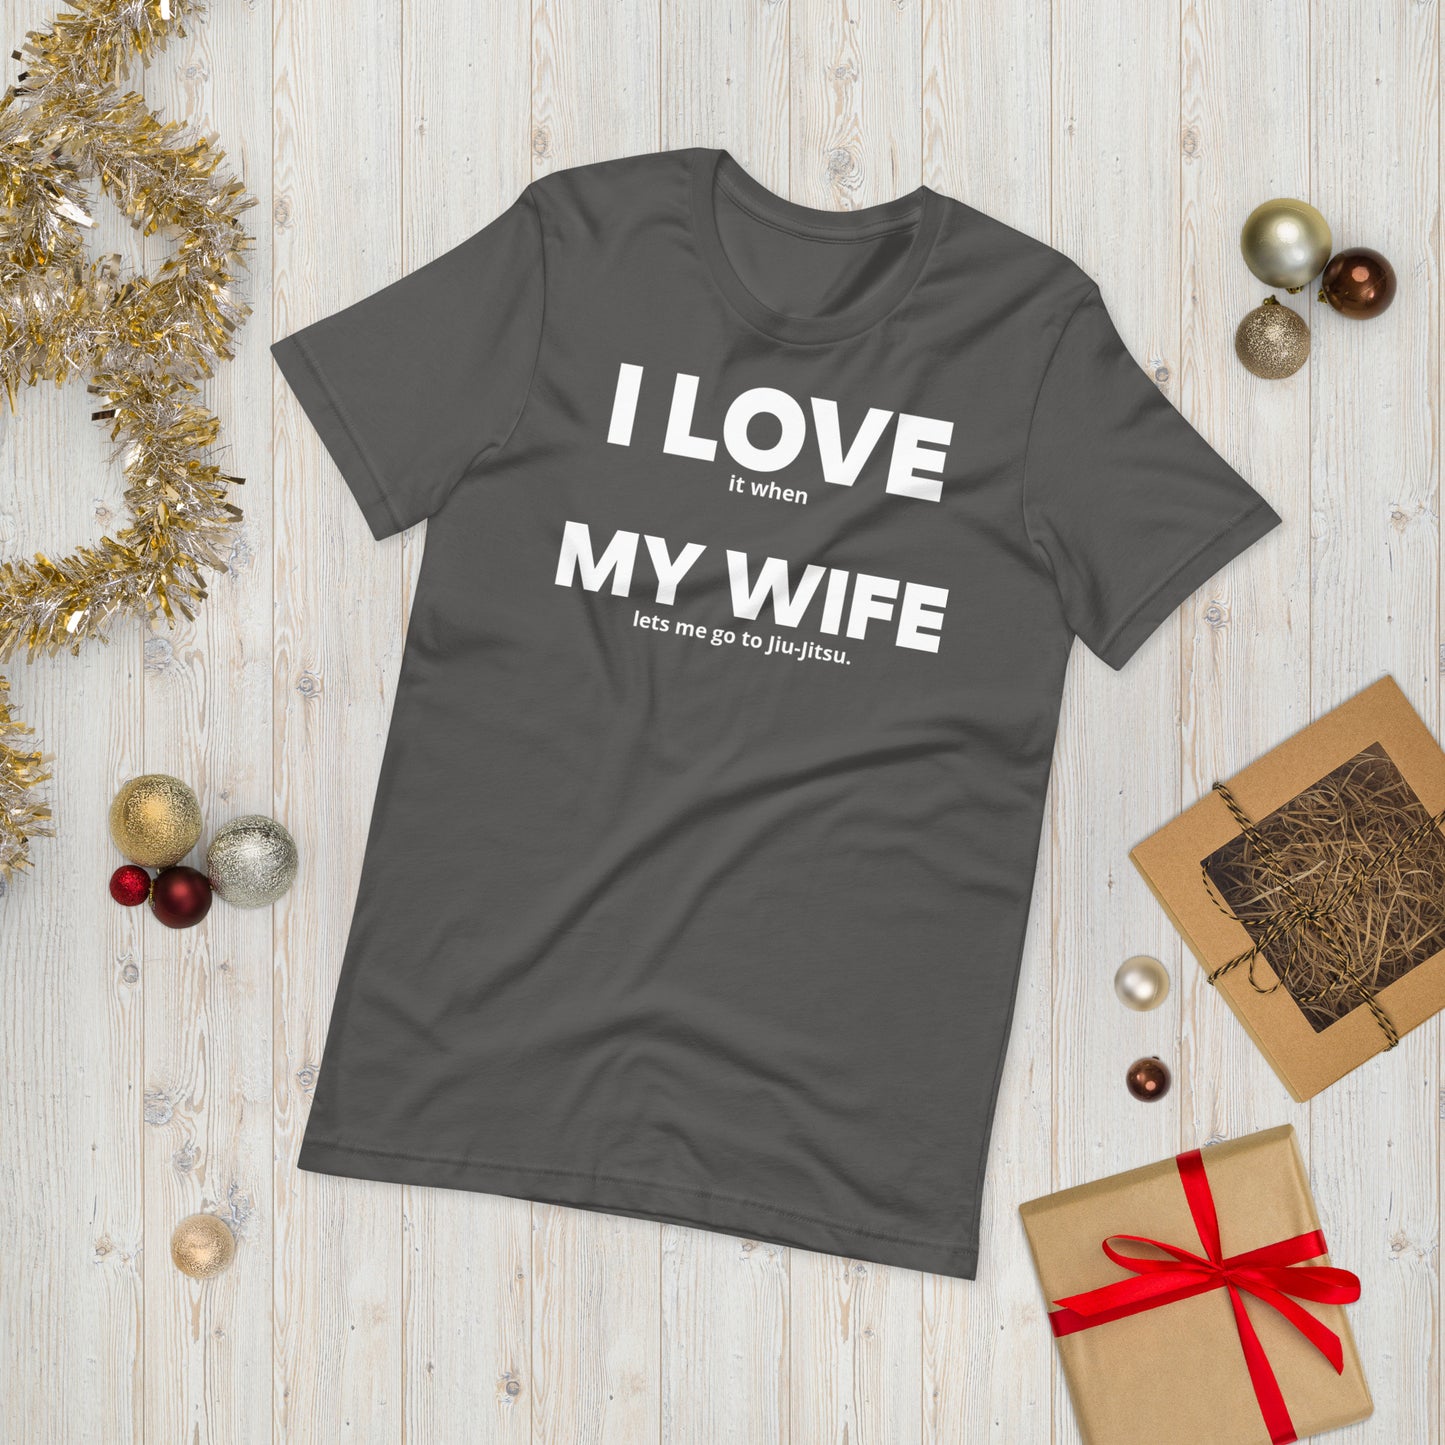 I LOVE MY WIFE  t-shirt